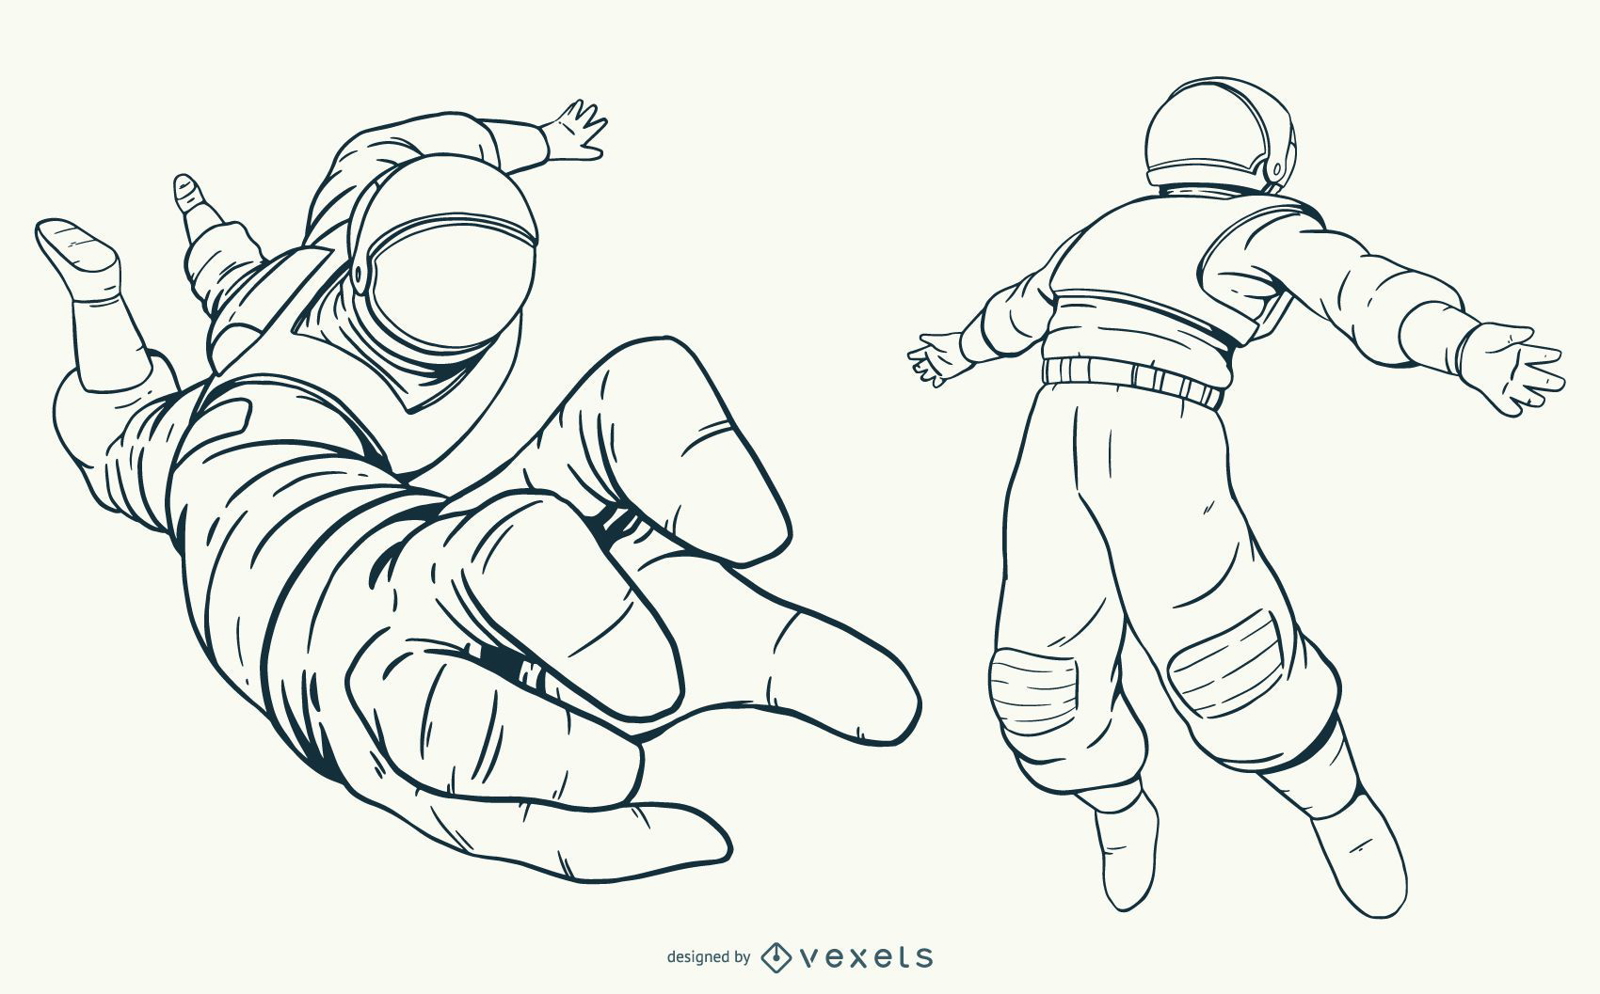 Hand drawn astronaut character set